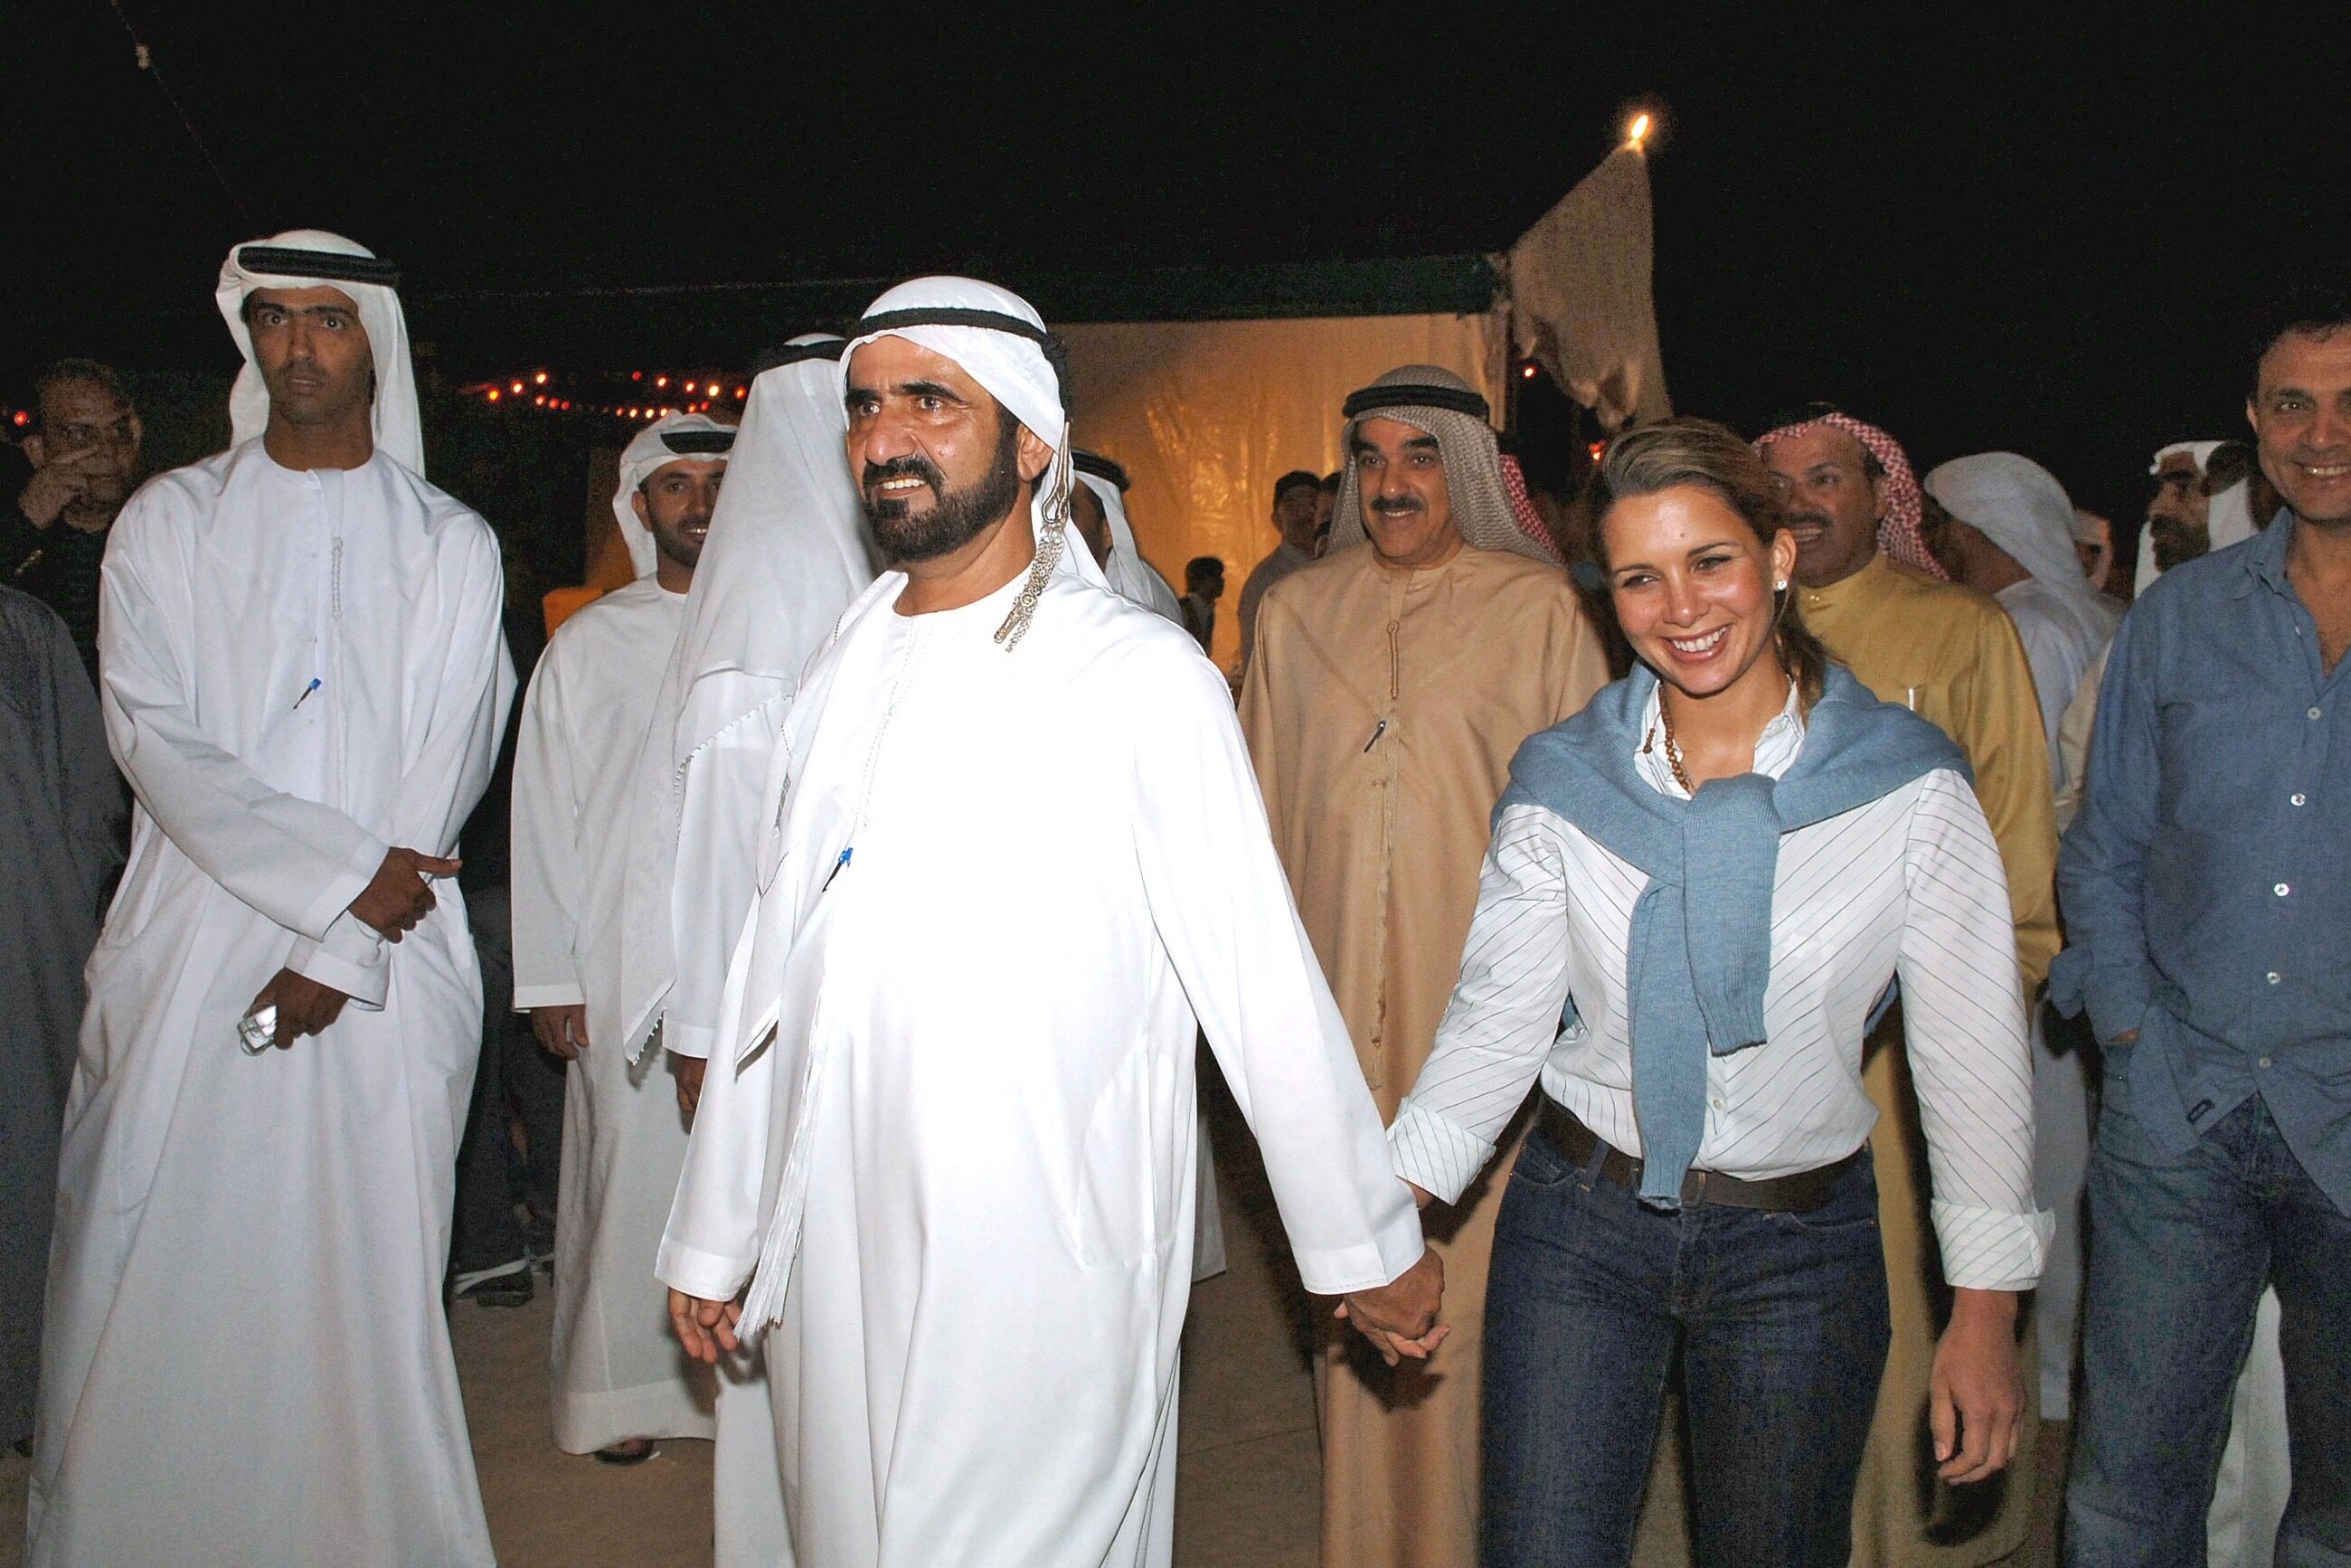 4 жена шейха. Принцесса Хайя жена шейха Дубаи. Шейх Аль Мактум Дубай. Принц Саудовской Аравии Хамдан. Шейха шейха бинт Саид Бин Саид Аль-Мактум.